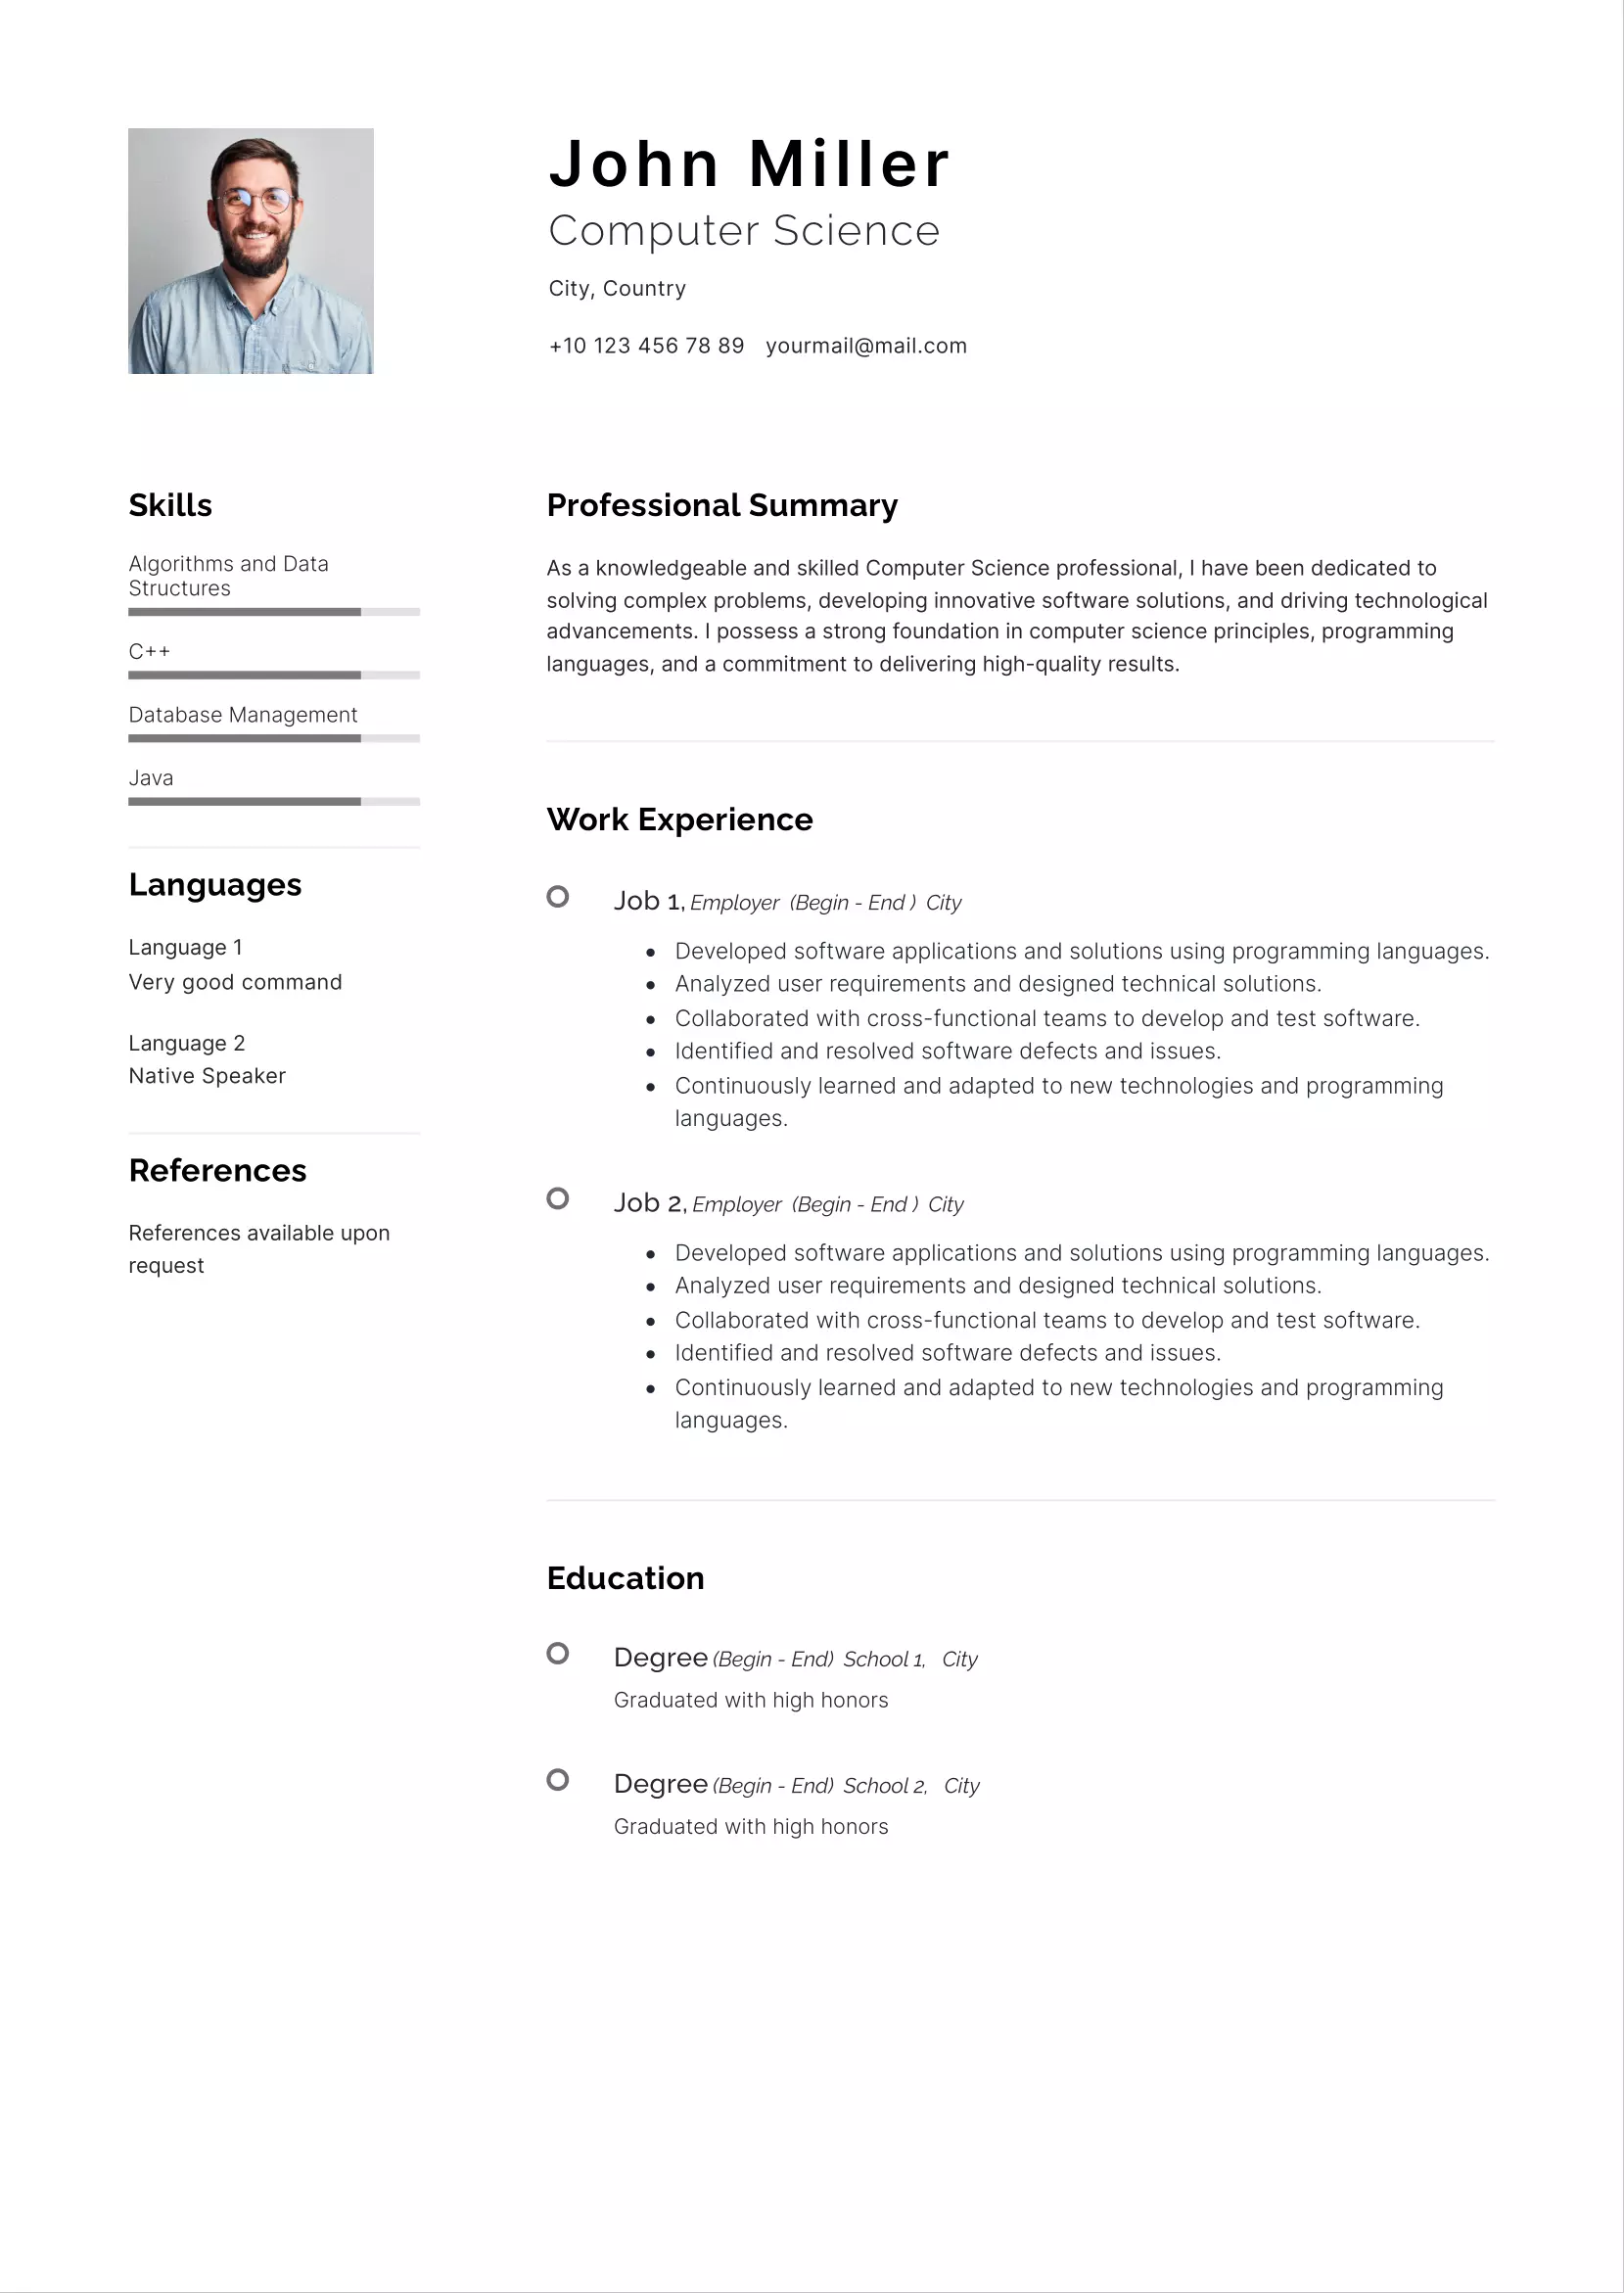 Computer science resume CV